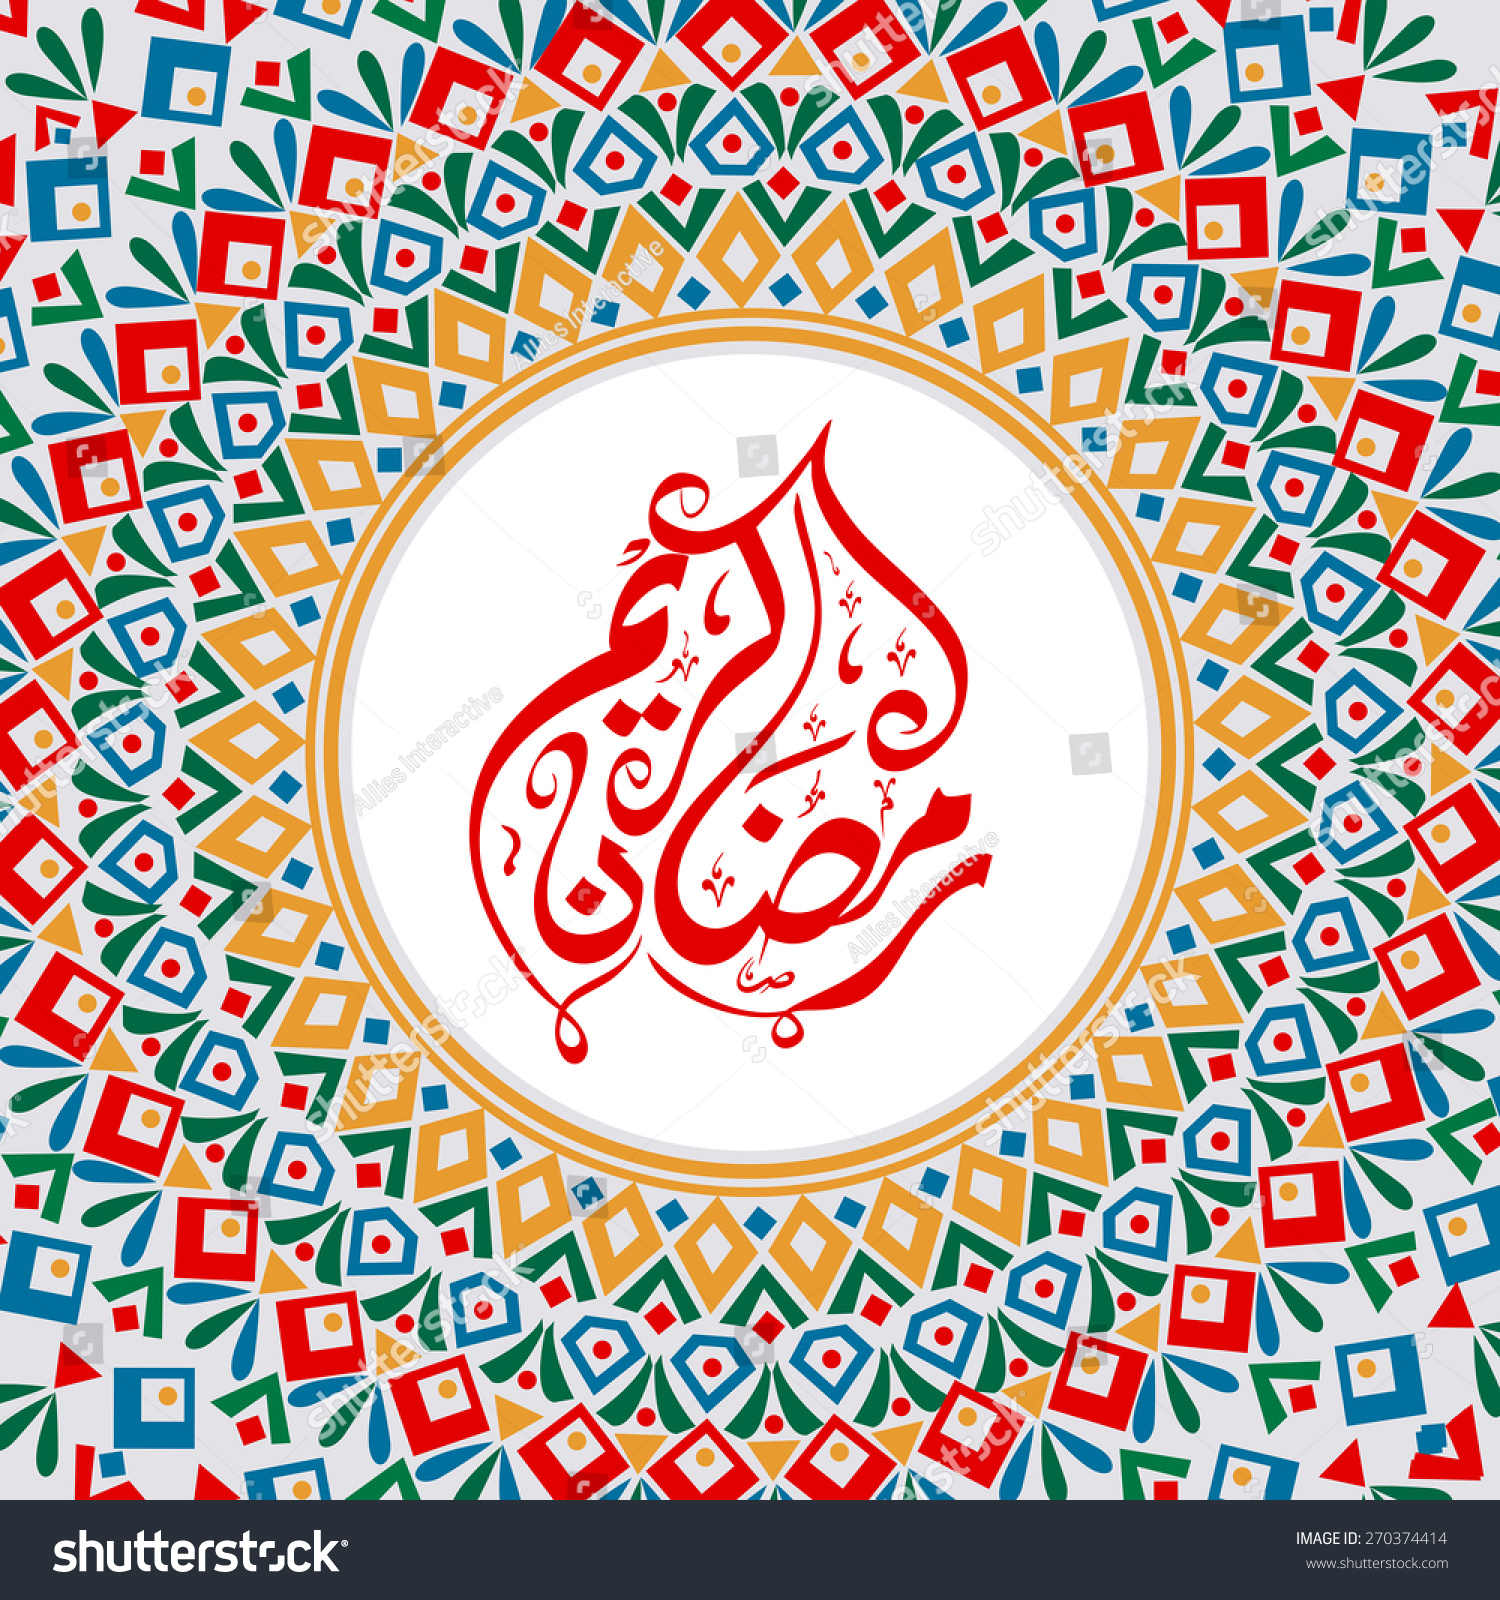 Muslim banners arabic writing